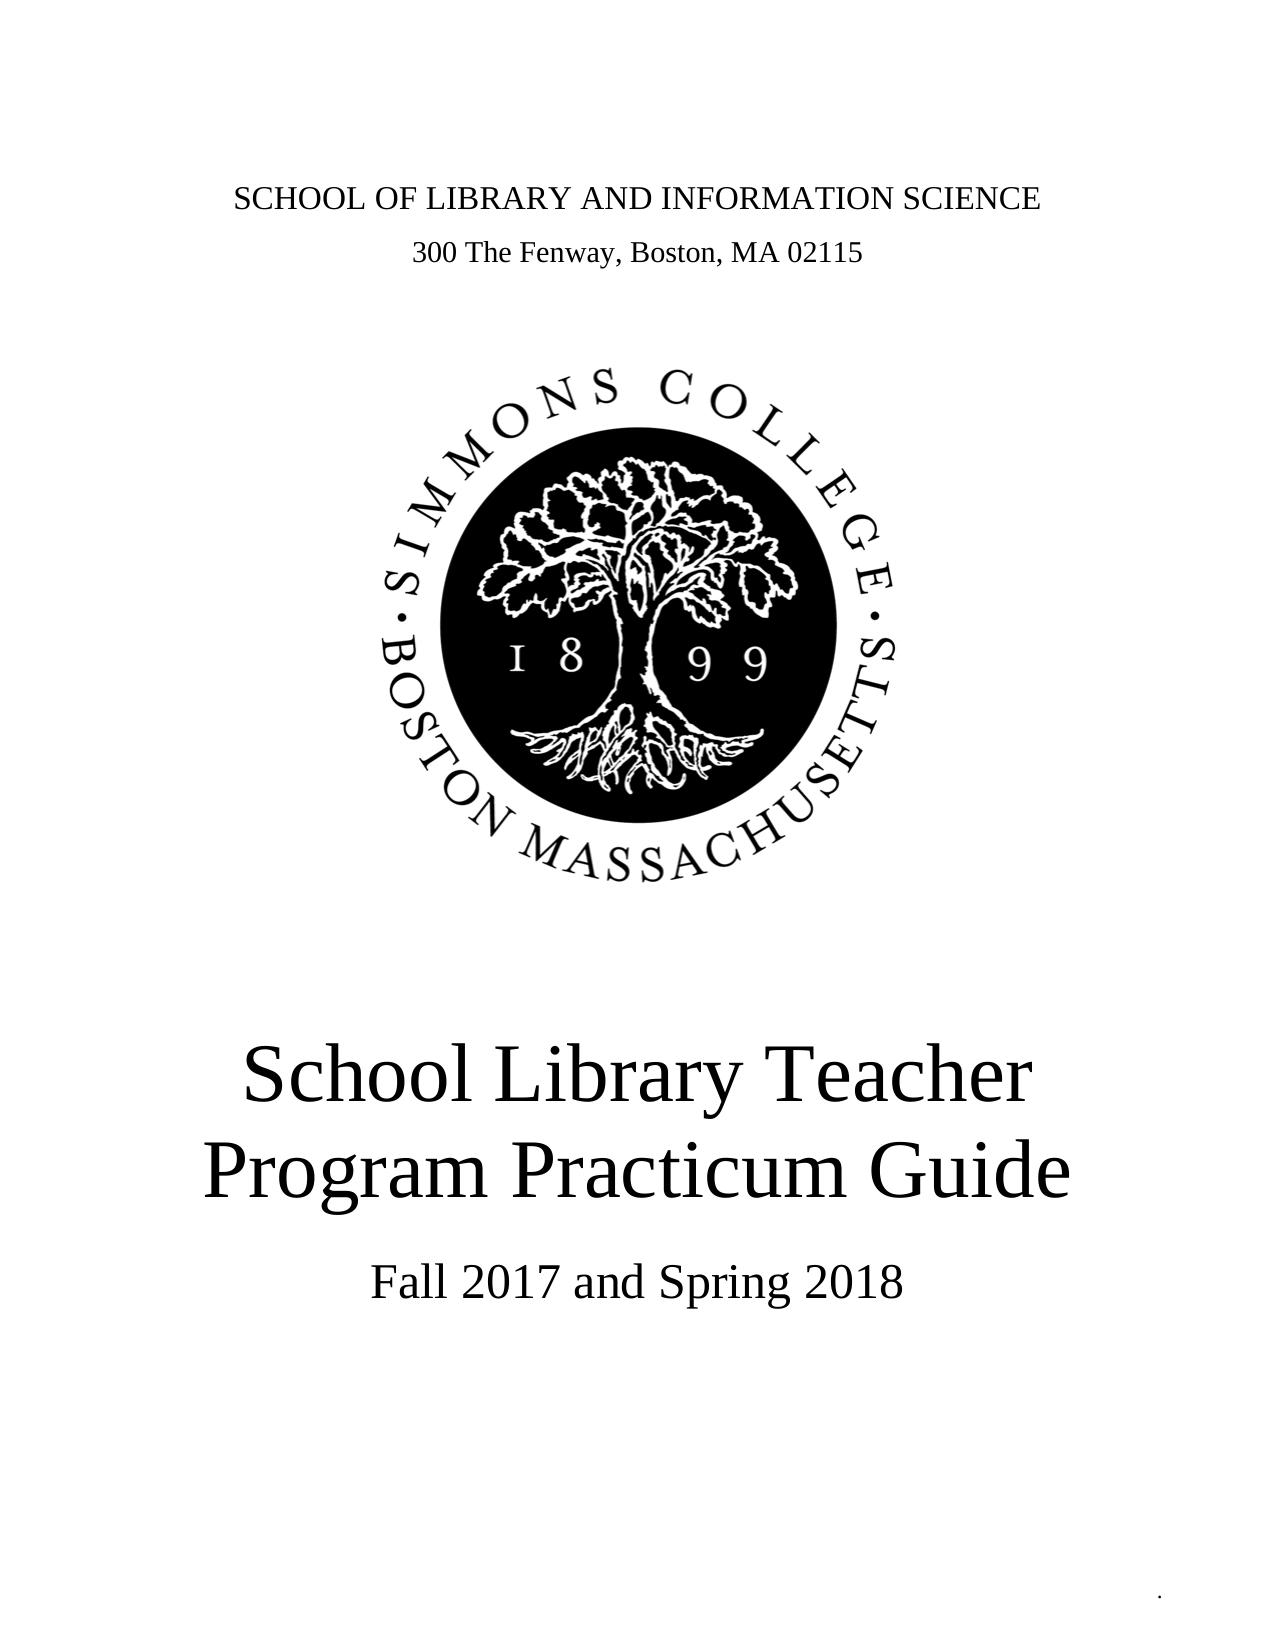 The School Library Teacher Practicum Guide 2018.pdf